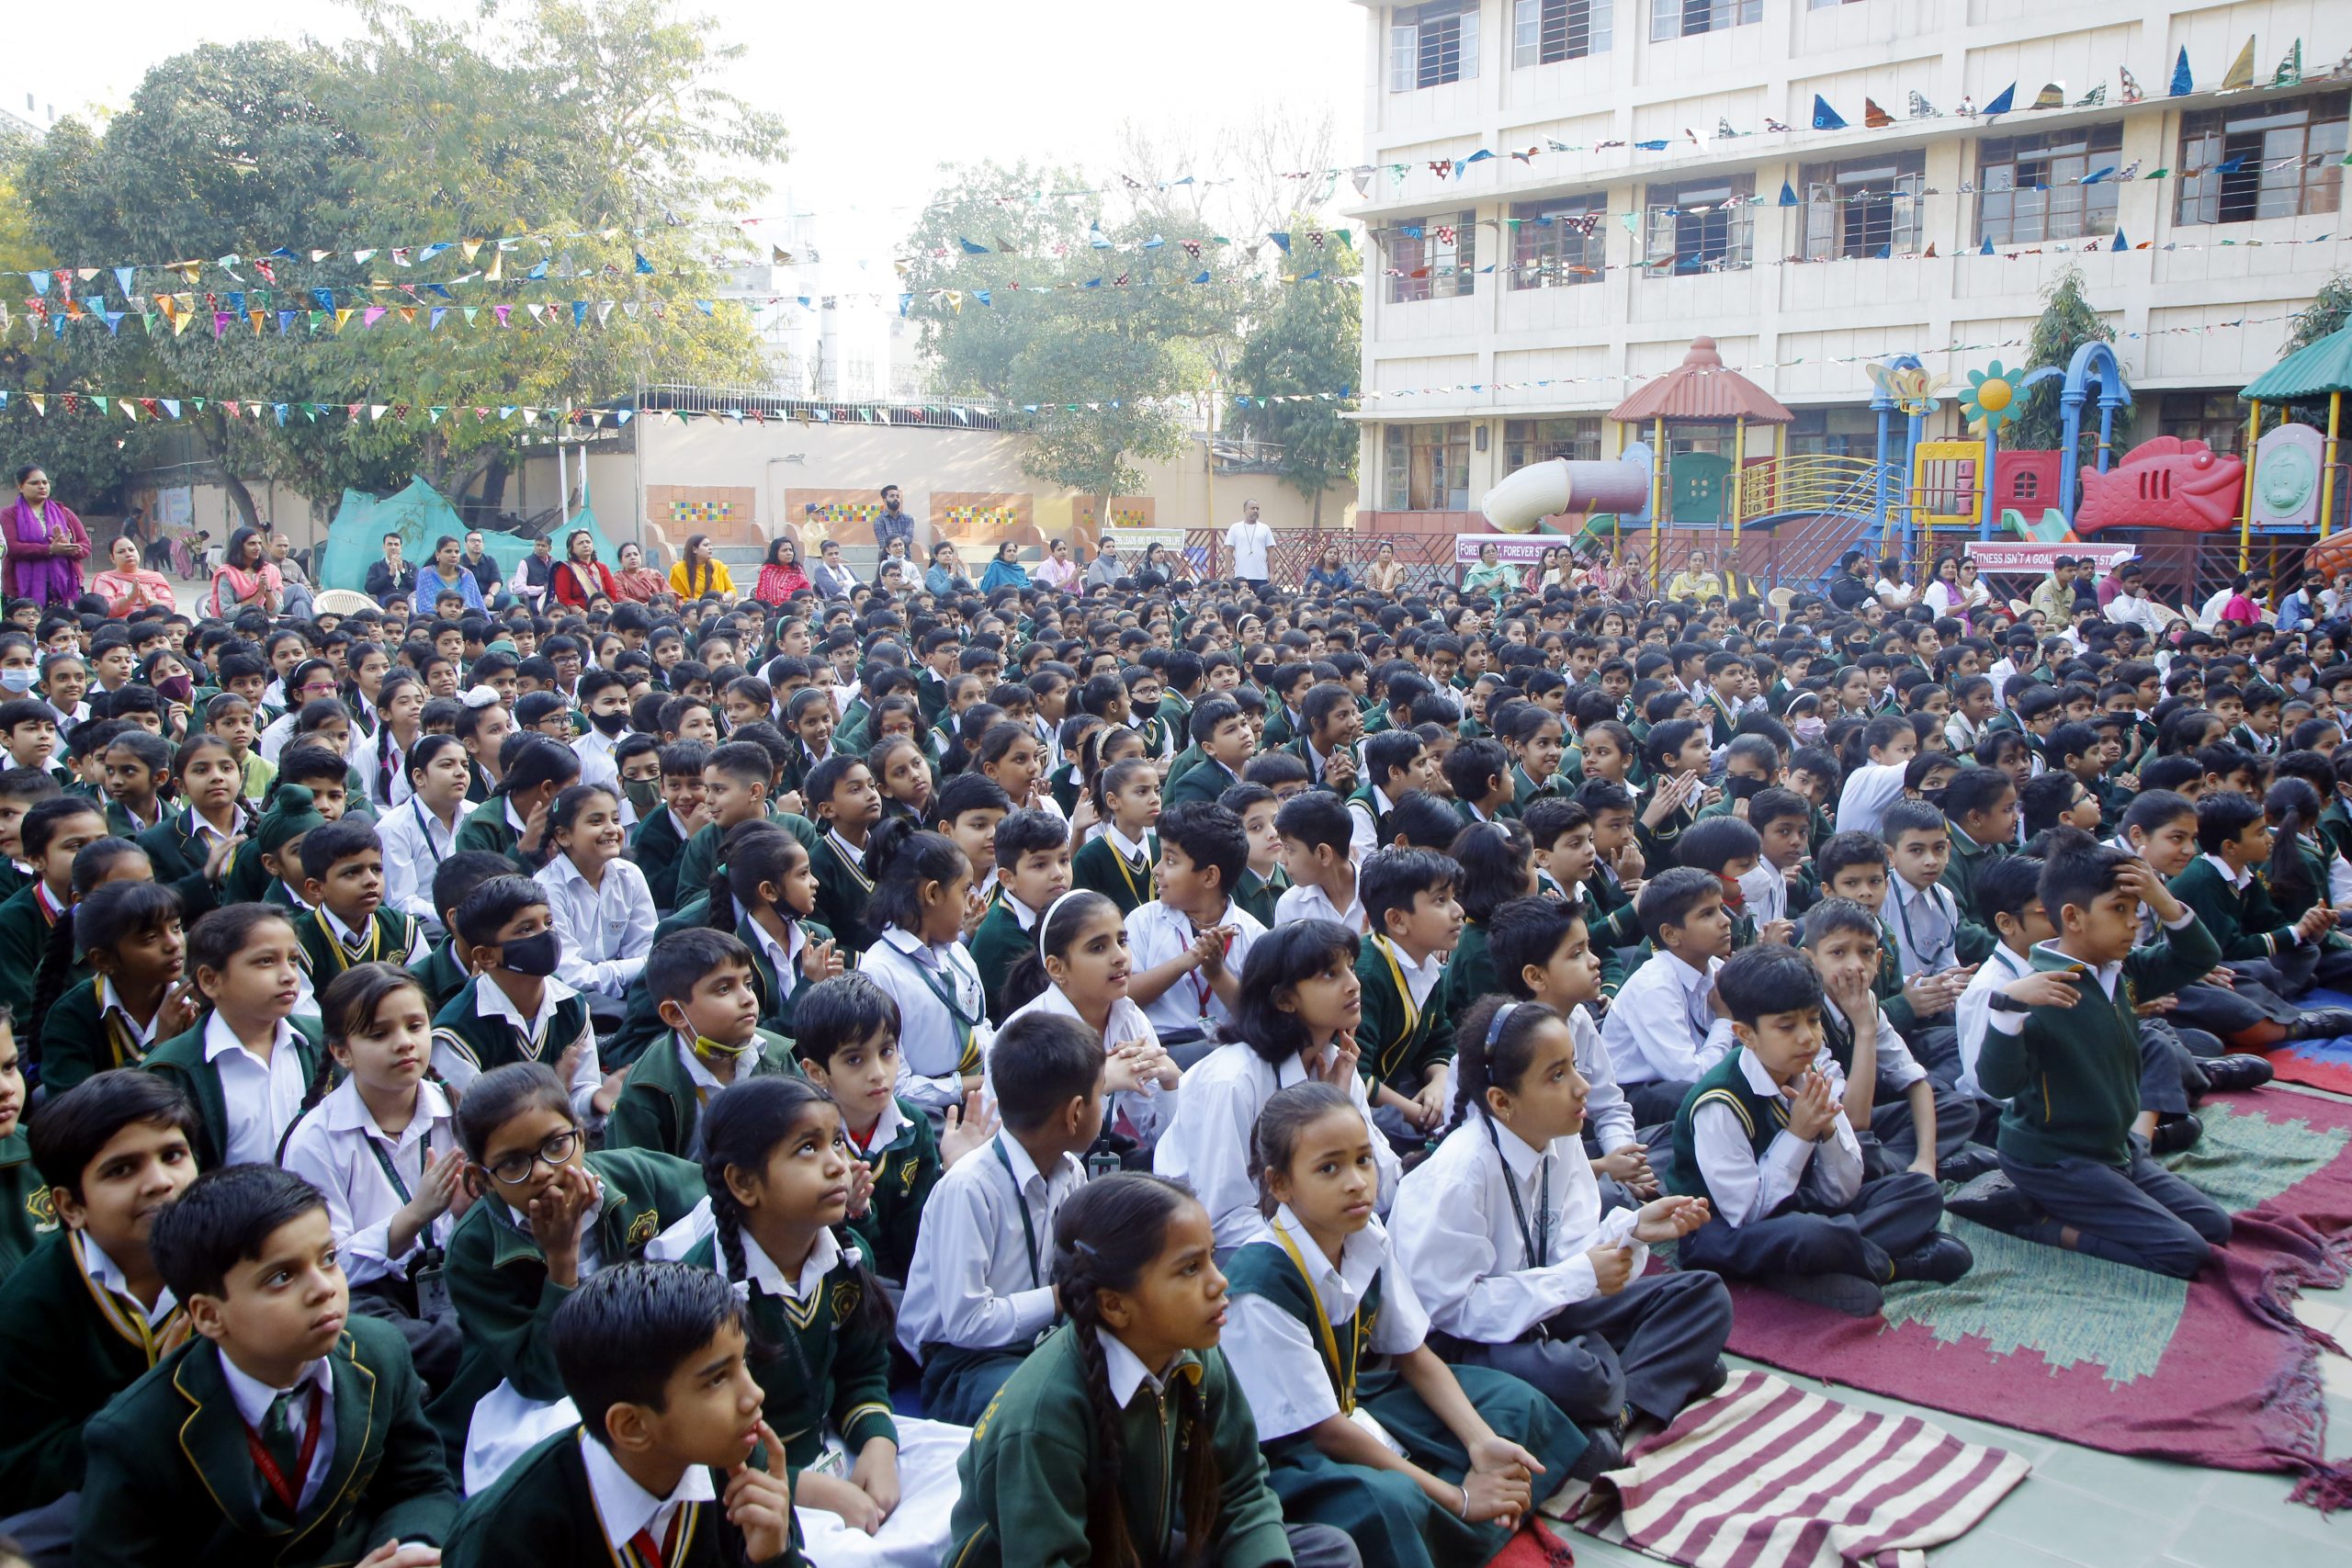 GREEN FIELDS SCHOOL DELHI INDIA